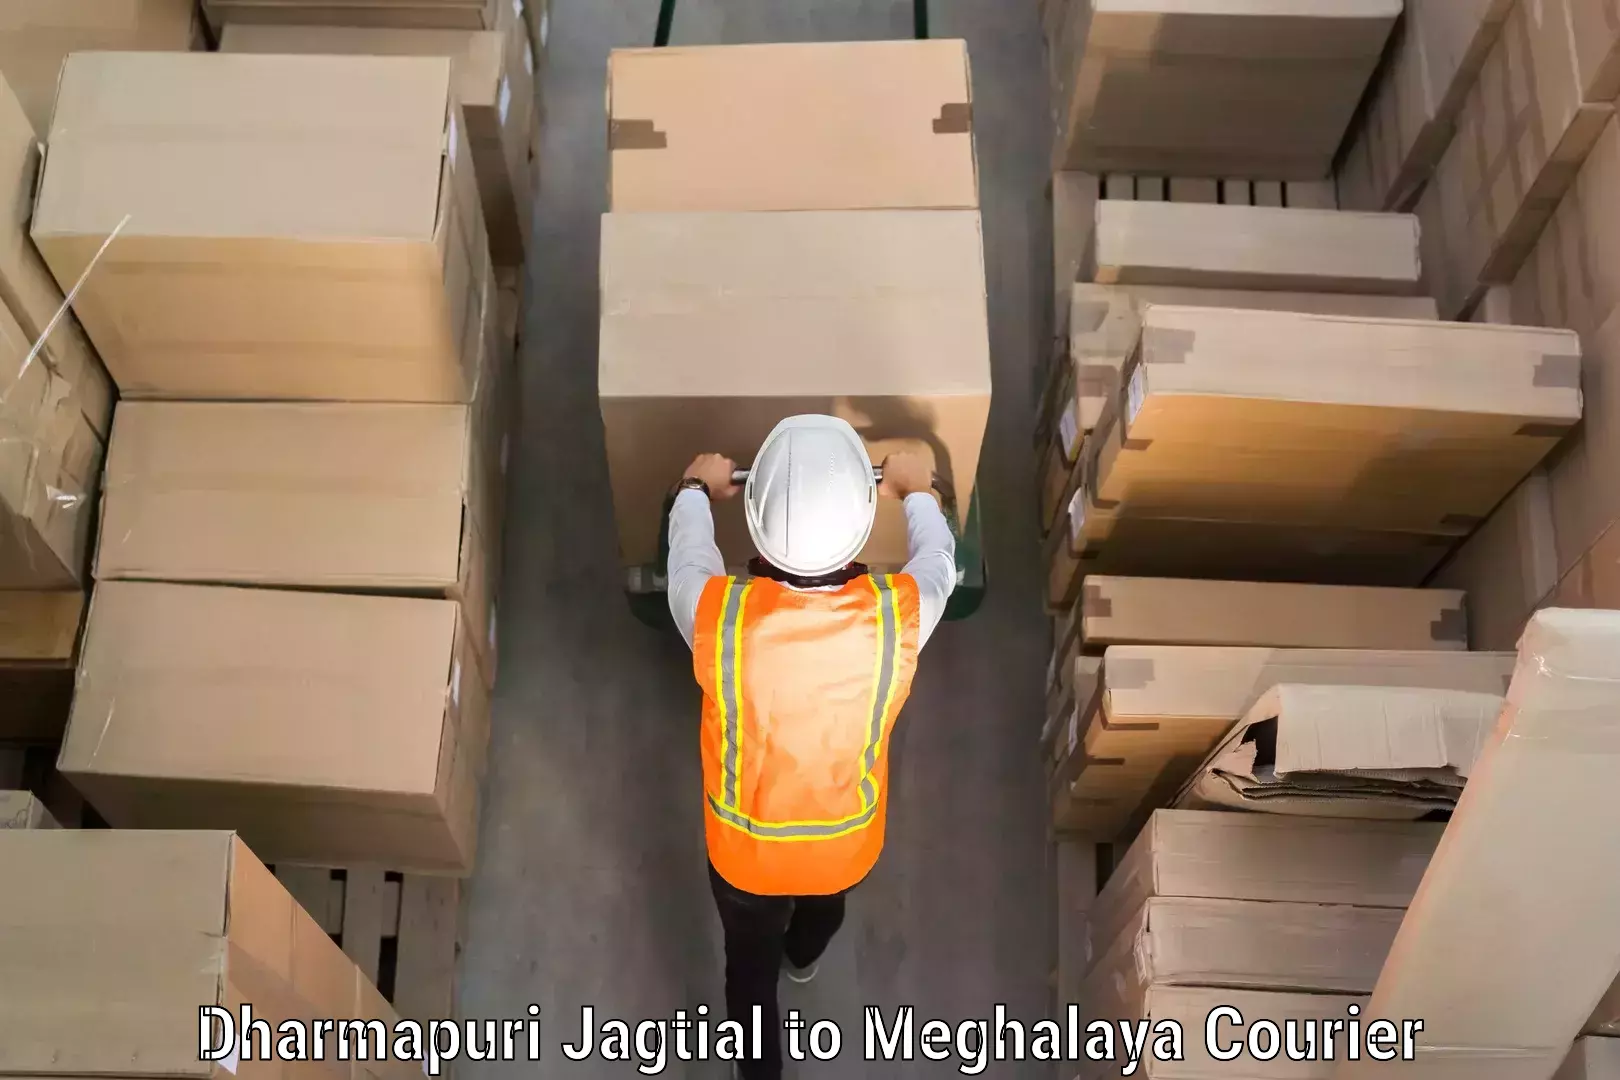 Baggage delivery technology Dharmapuri Jagtial to Meghalaya